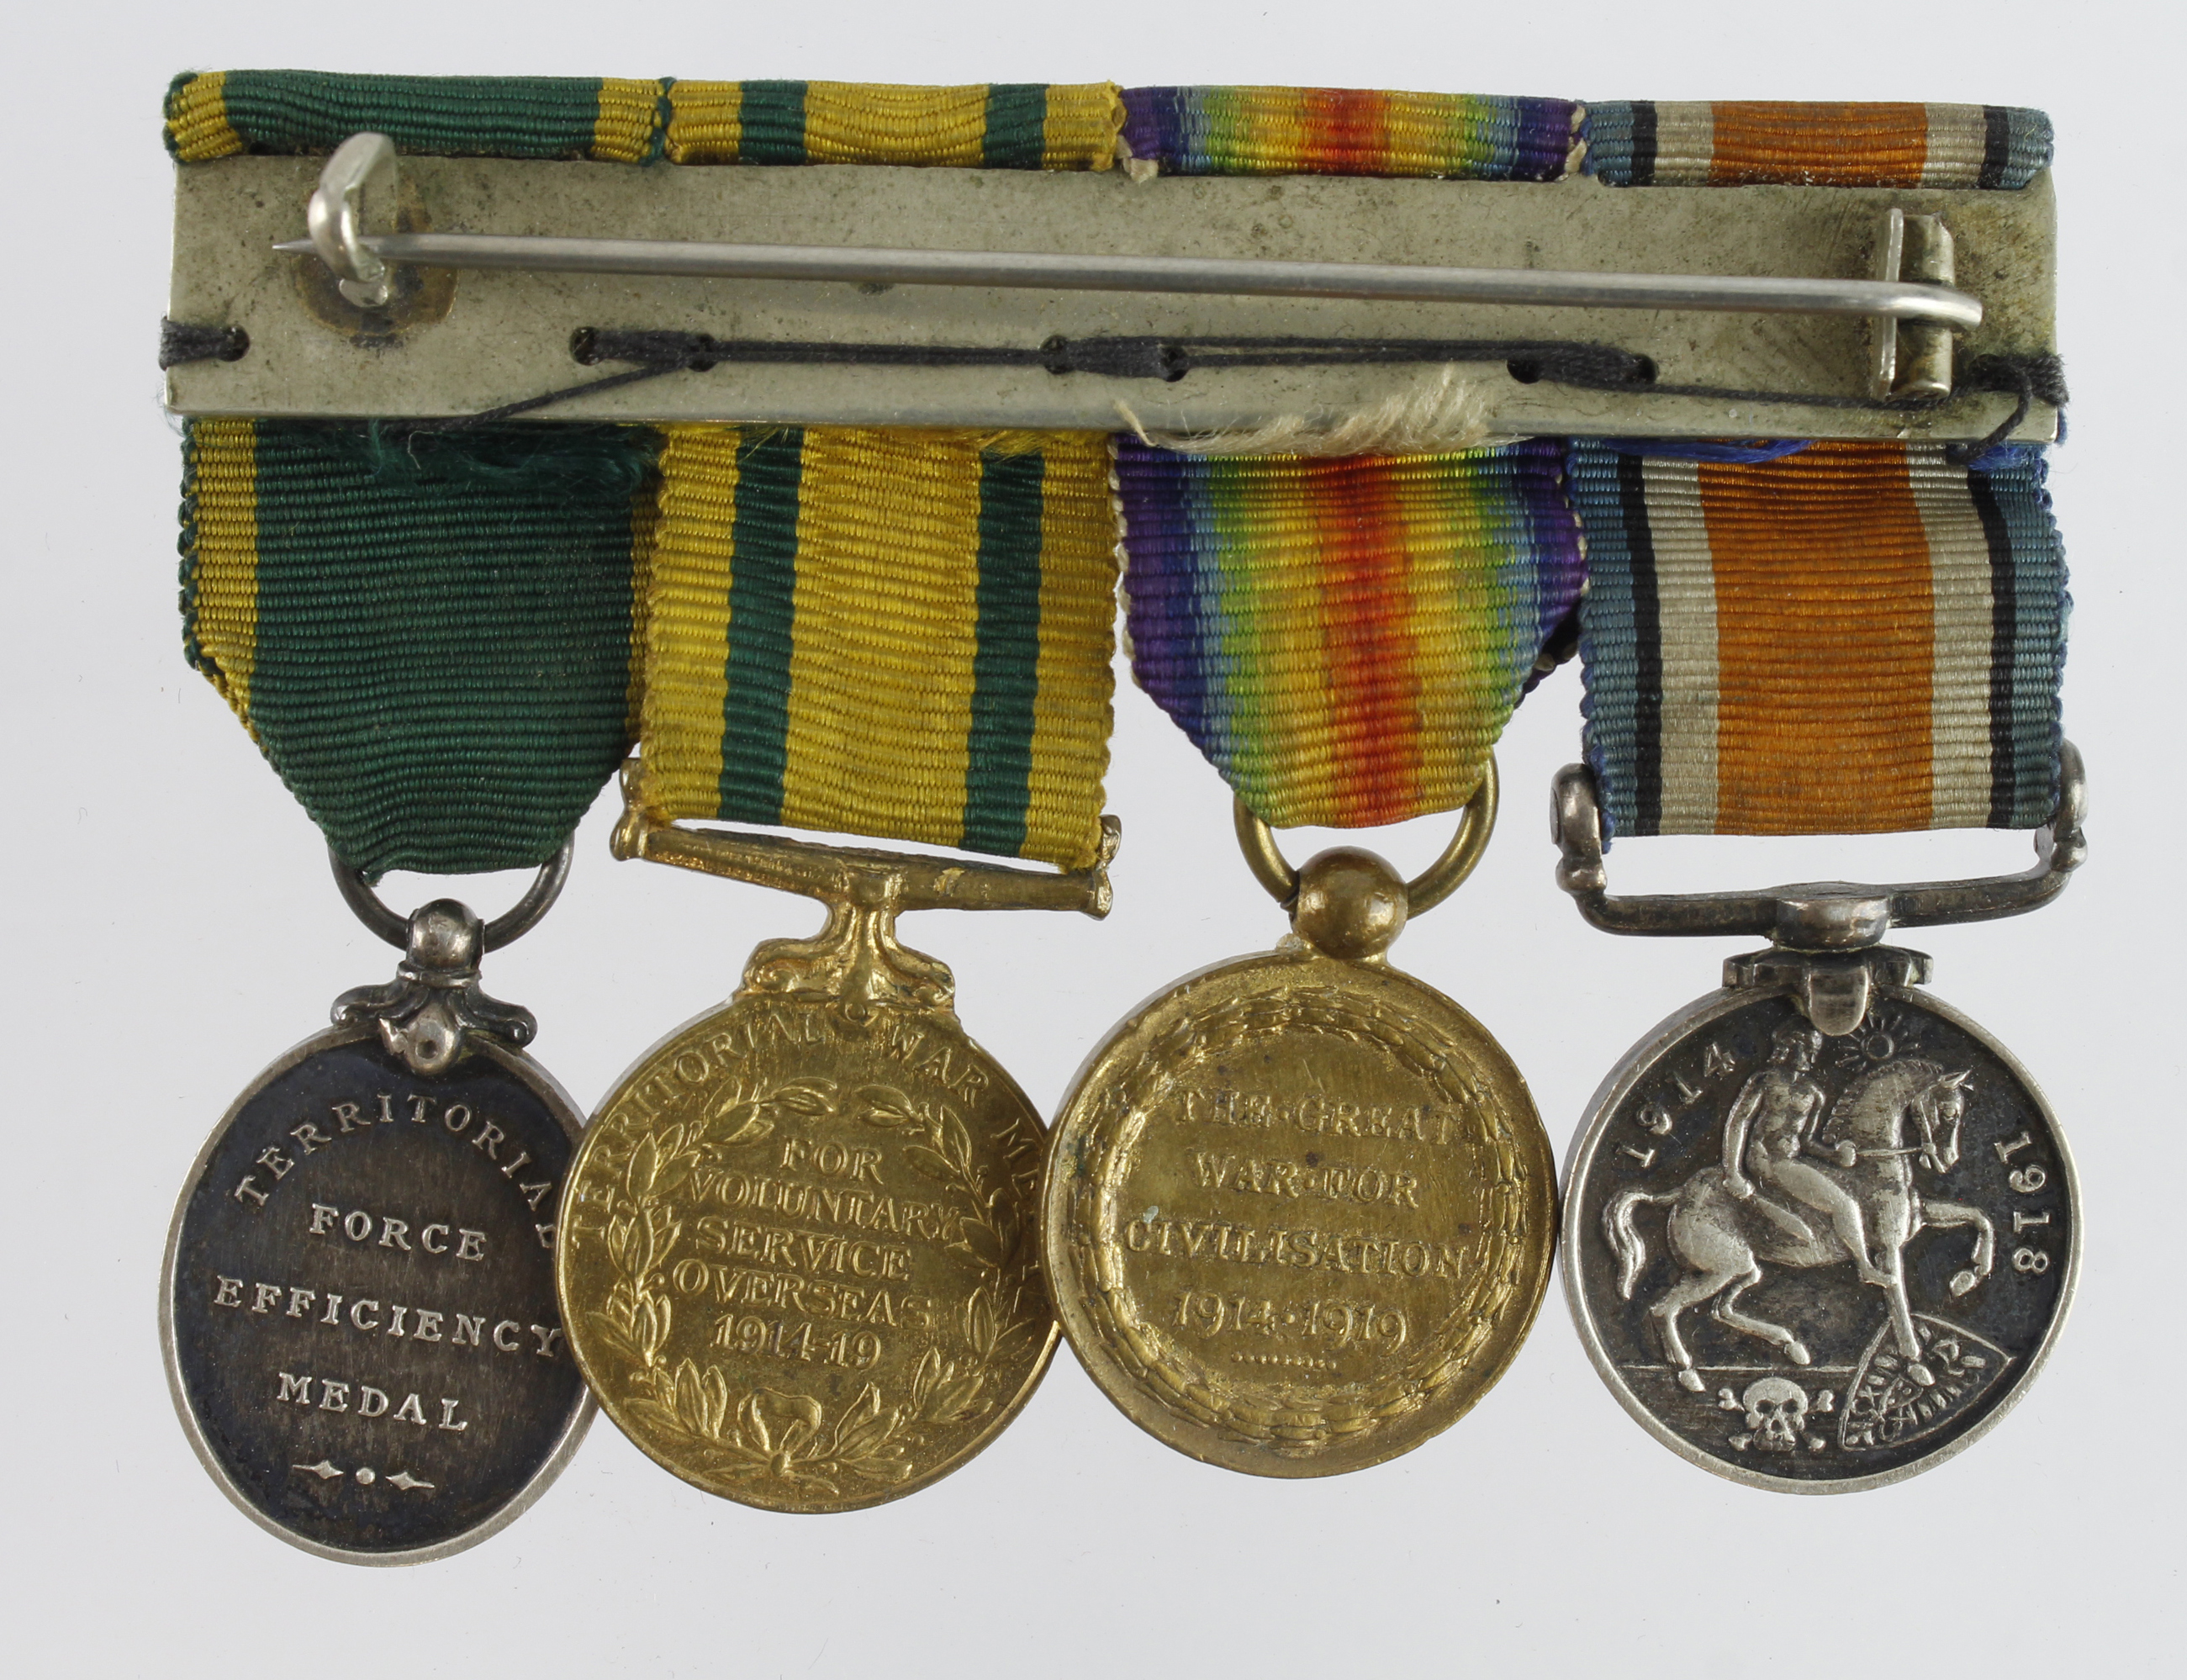 Minature Medal group mounted as worn - BWM & Victory Medal, Territorial War Medal, GV Territorial - Bild 2 aus 2